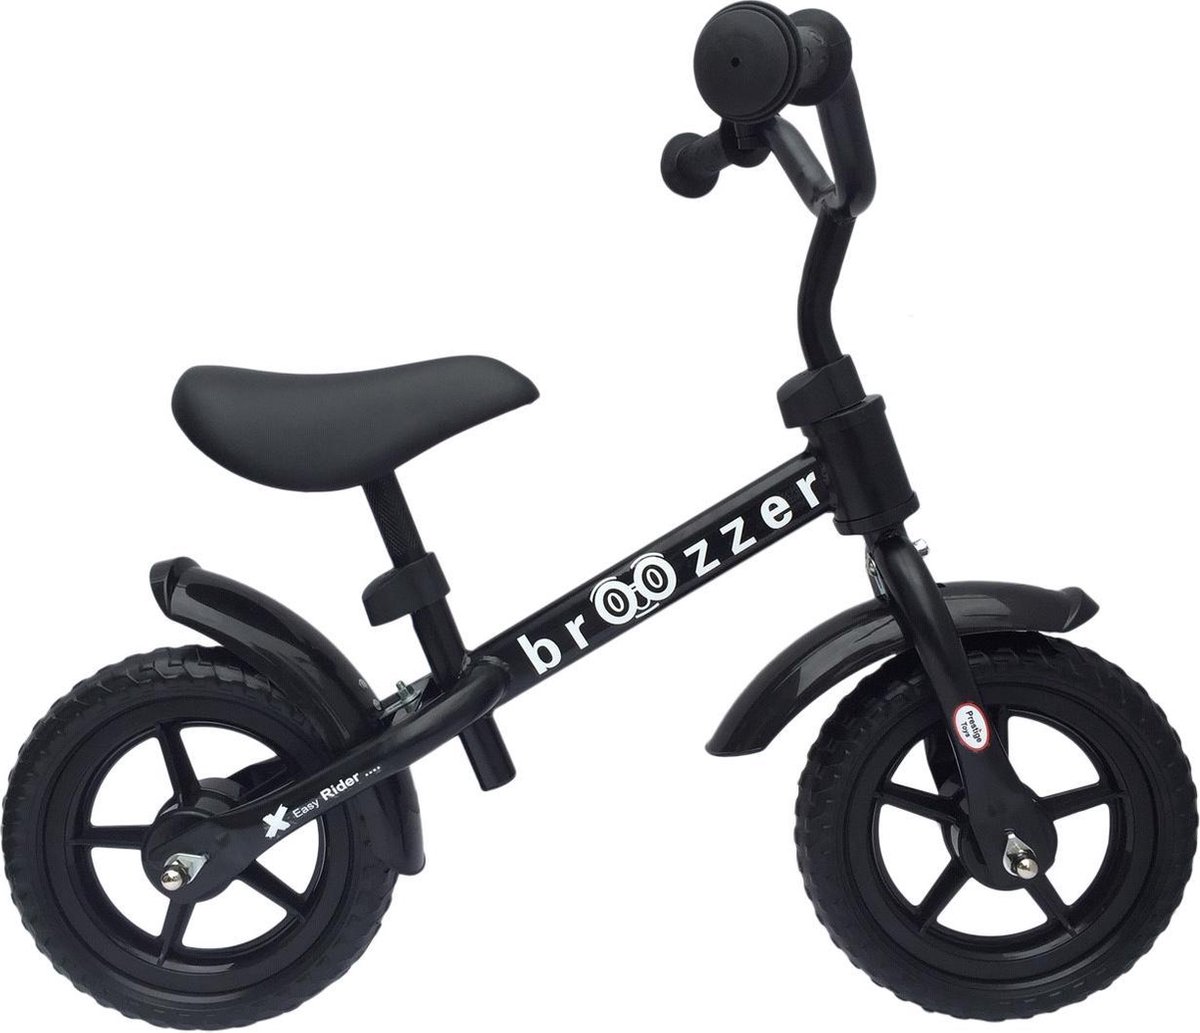 Broozzer Easy Rider Metaal 10 inch Zwart – Loopfiets (Black-edition 2019) - Broozzer